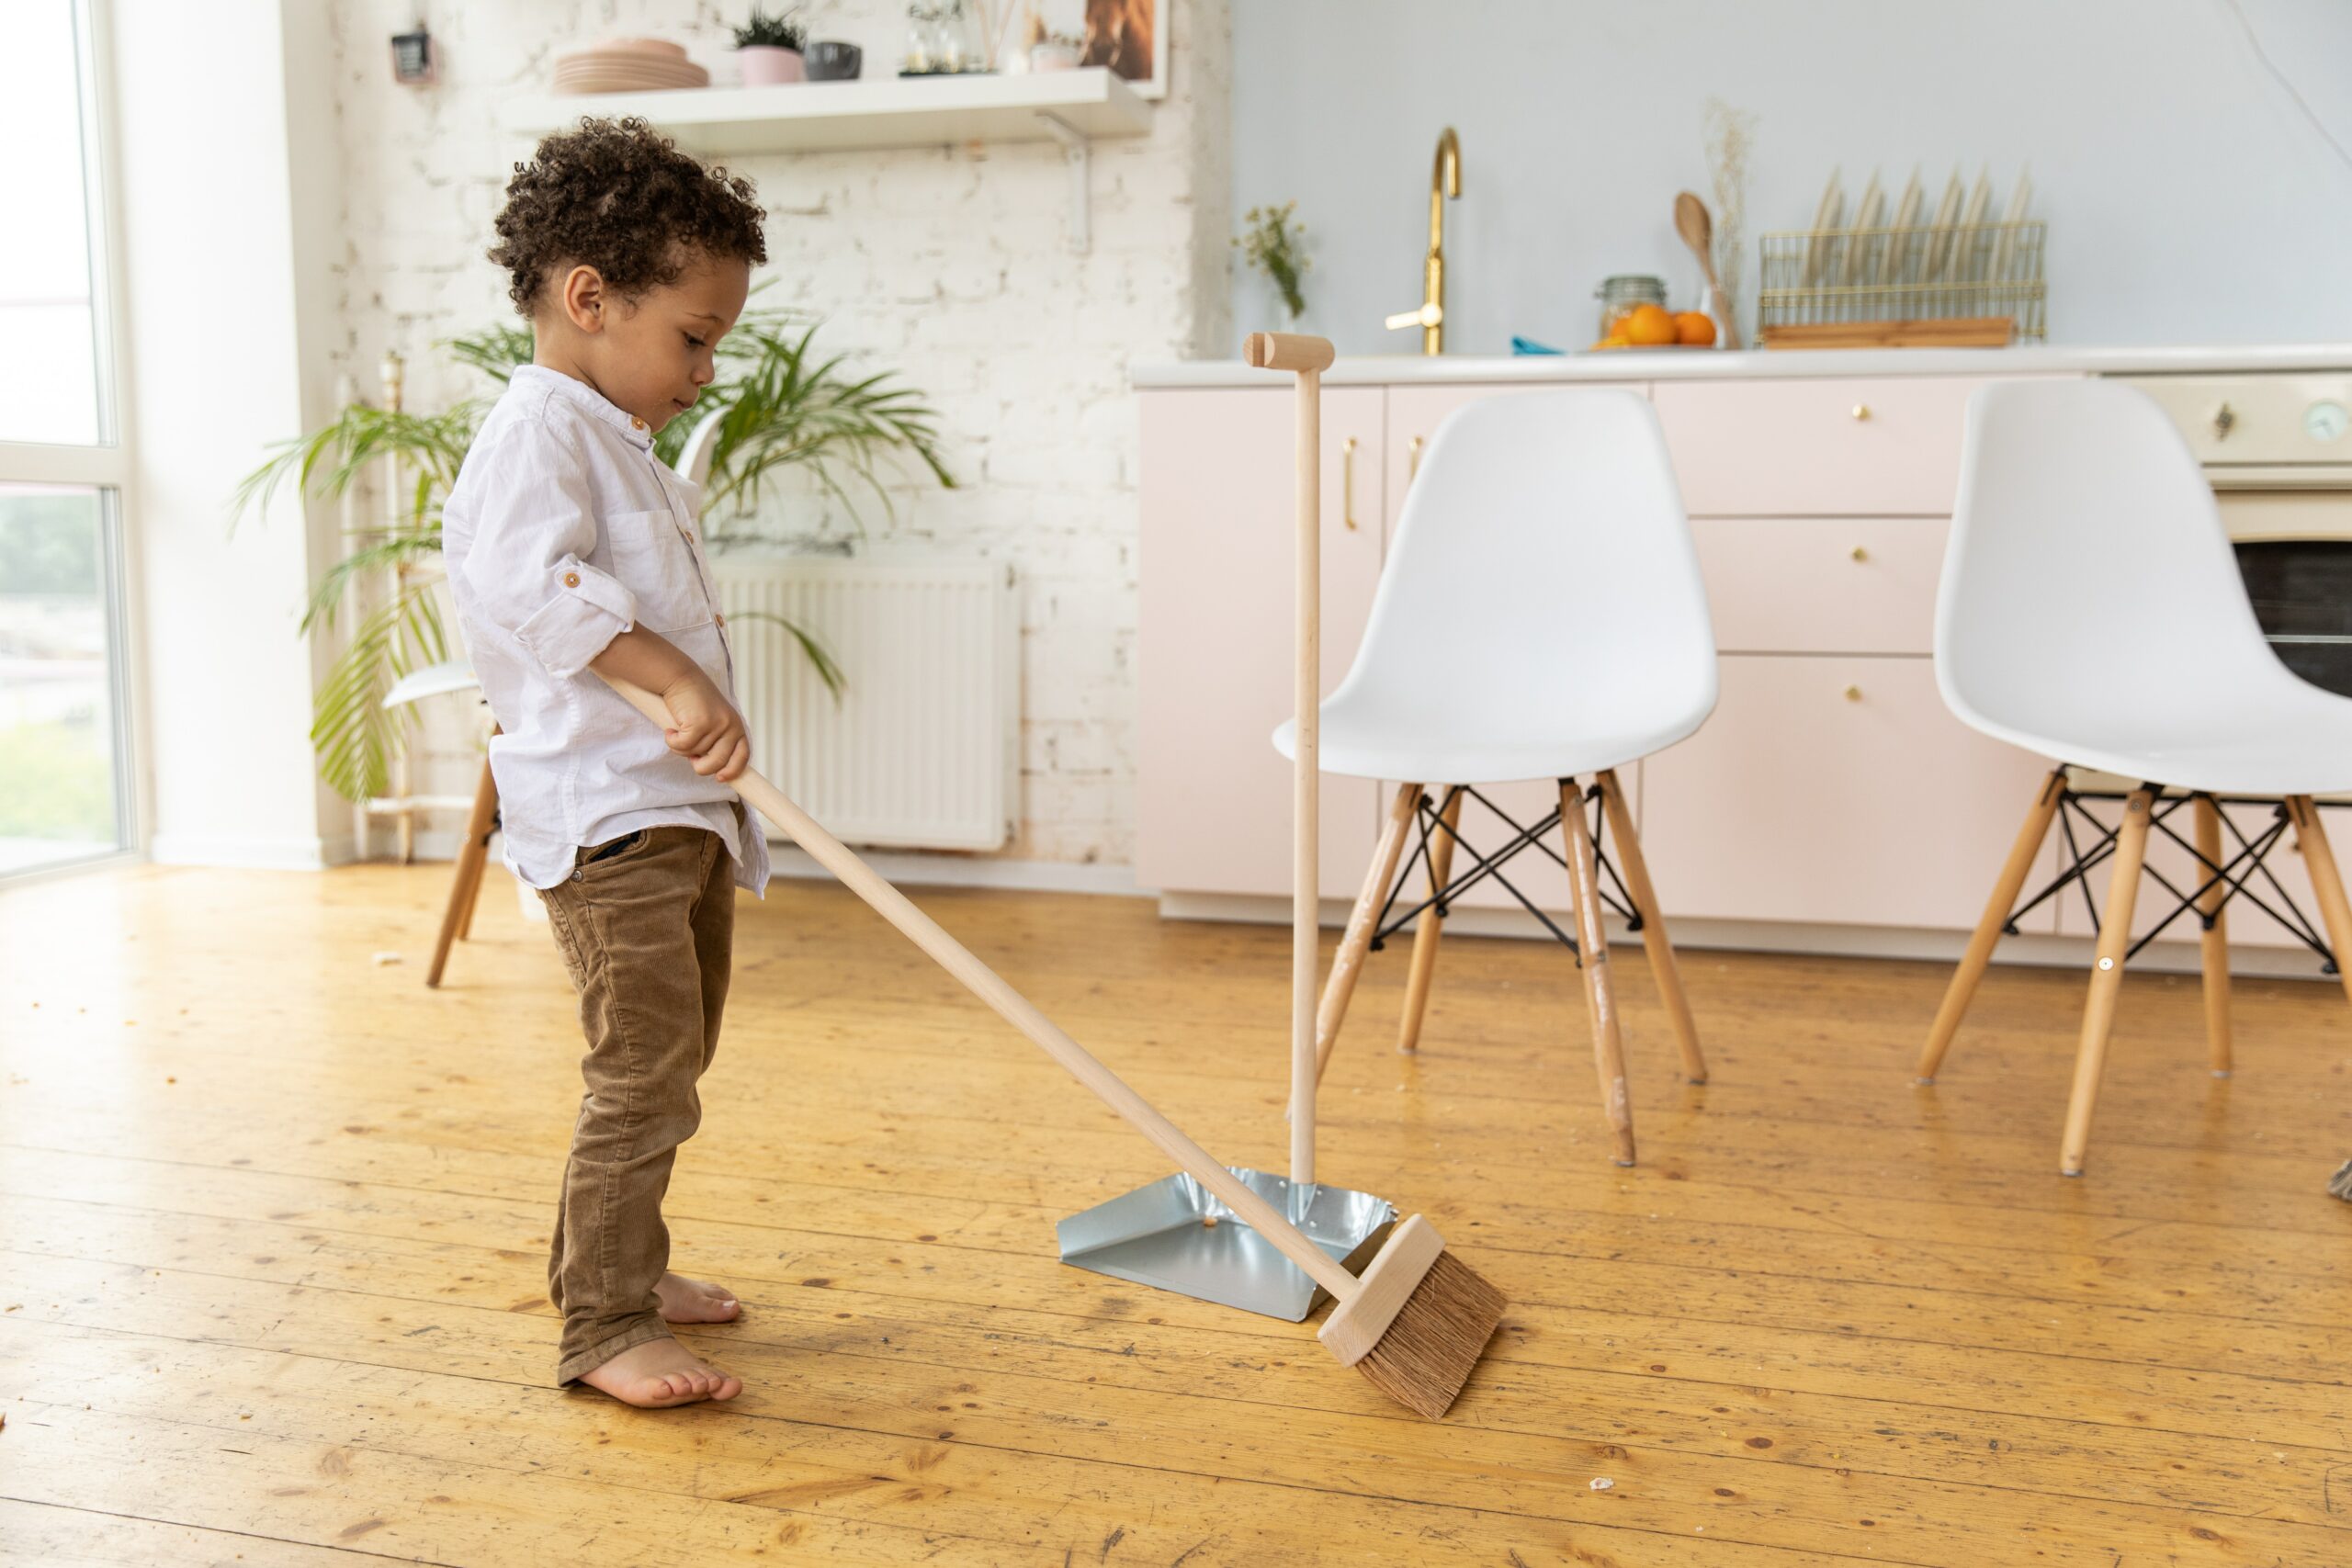 teach kids to clean up